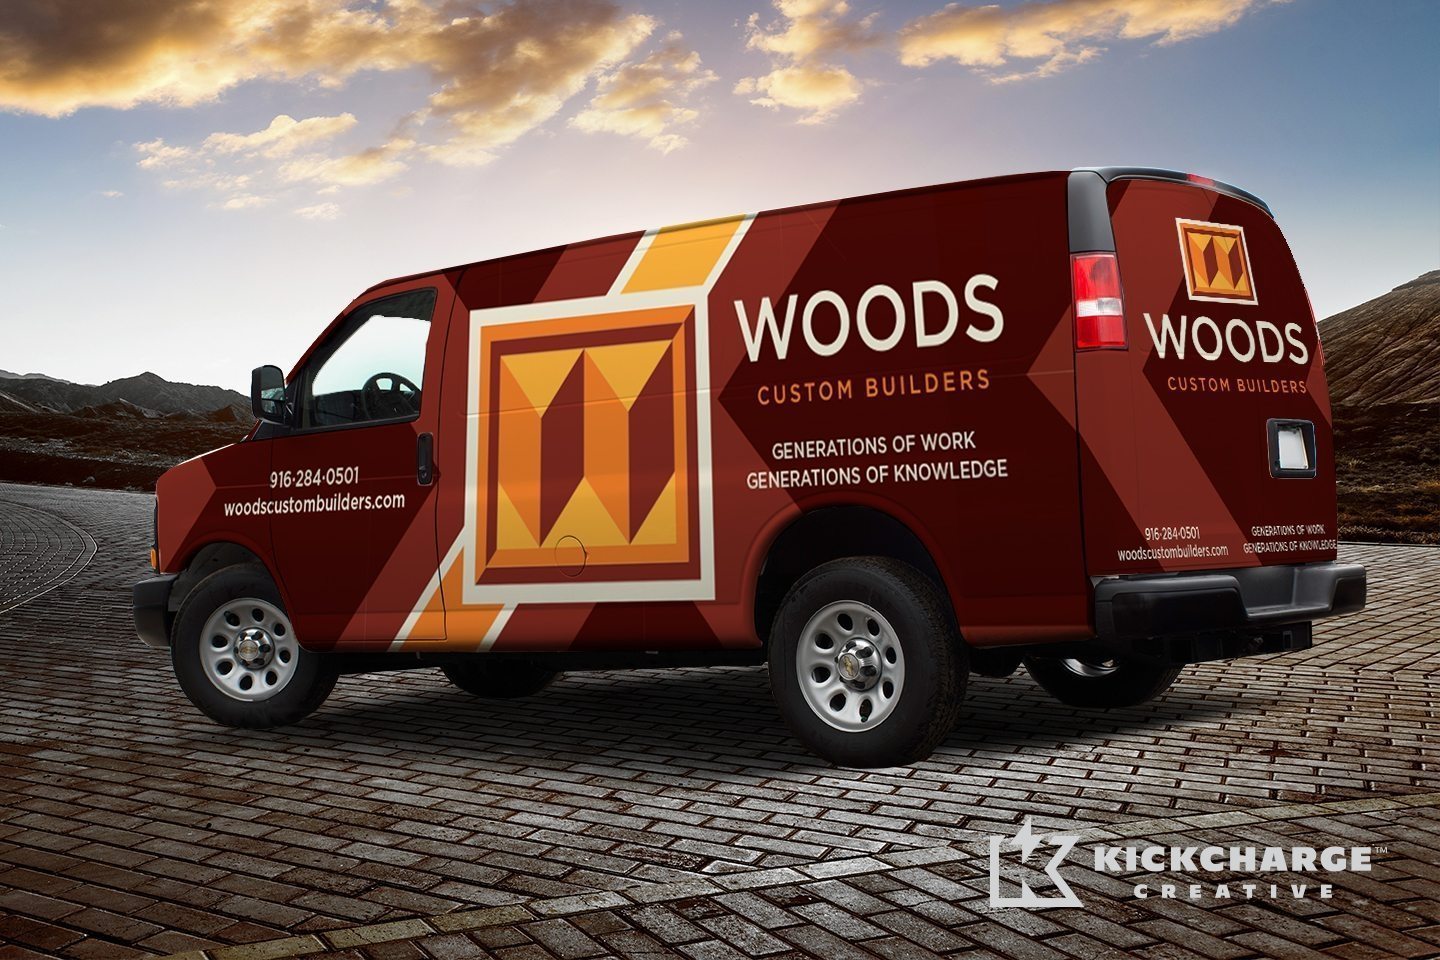 Woods Custom Builders vehicle wrap design for a home improvement company serving Sacramento, California.